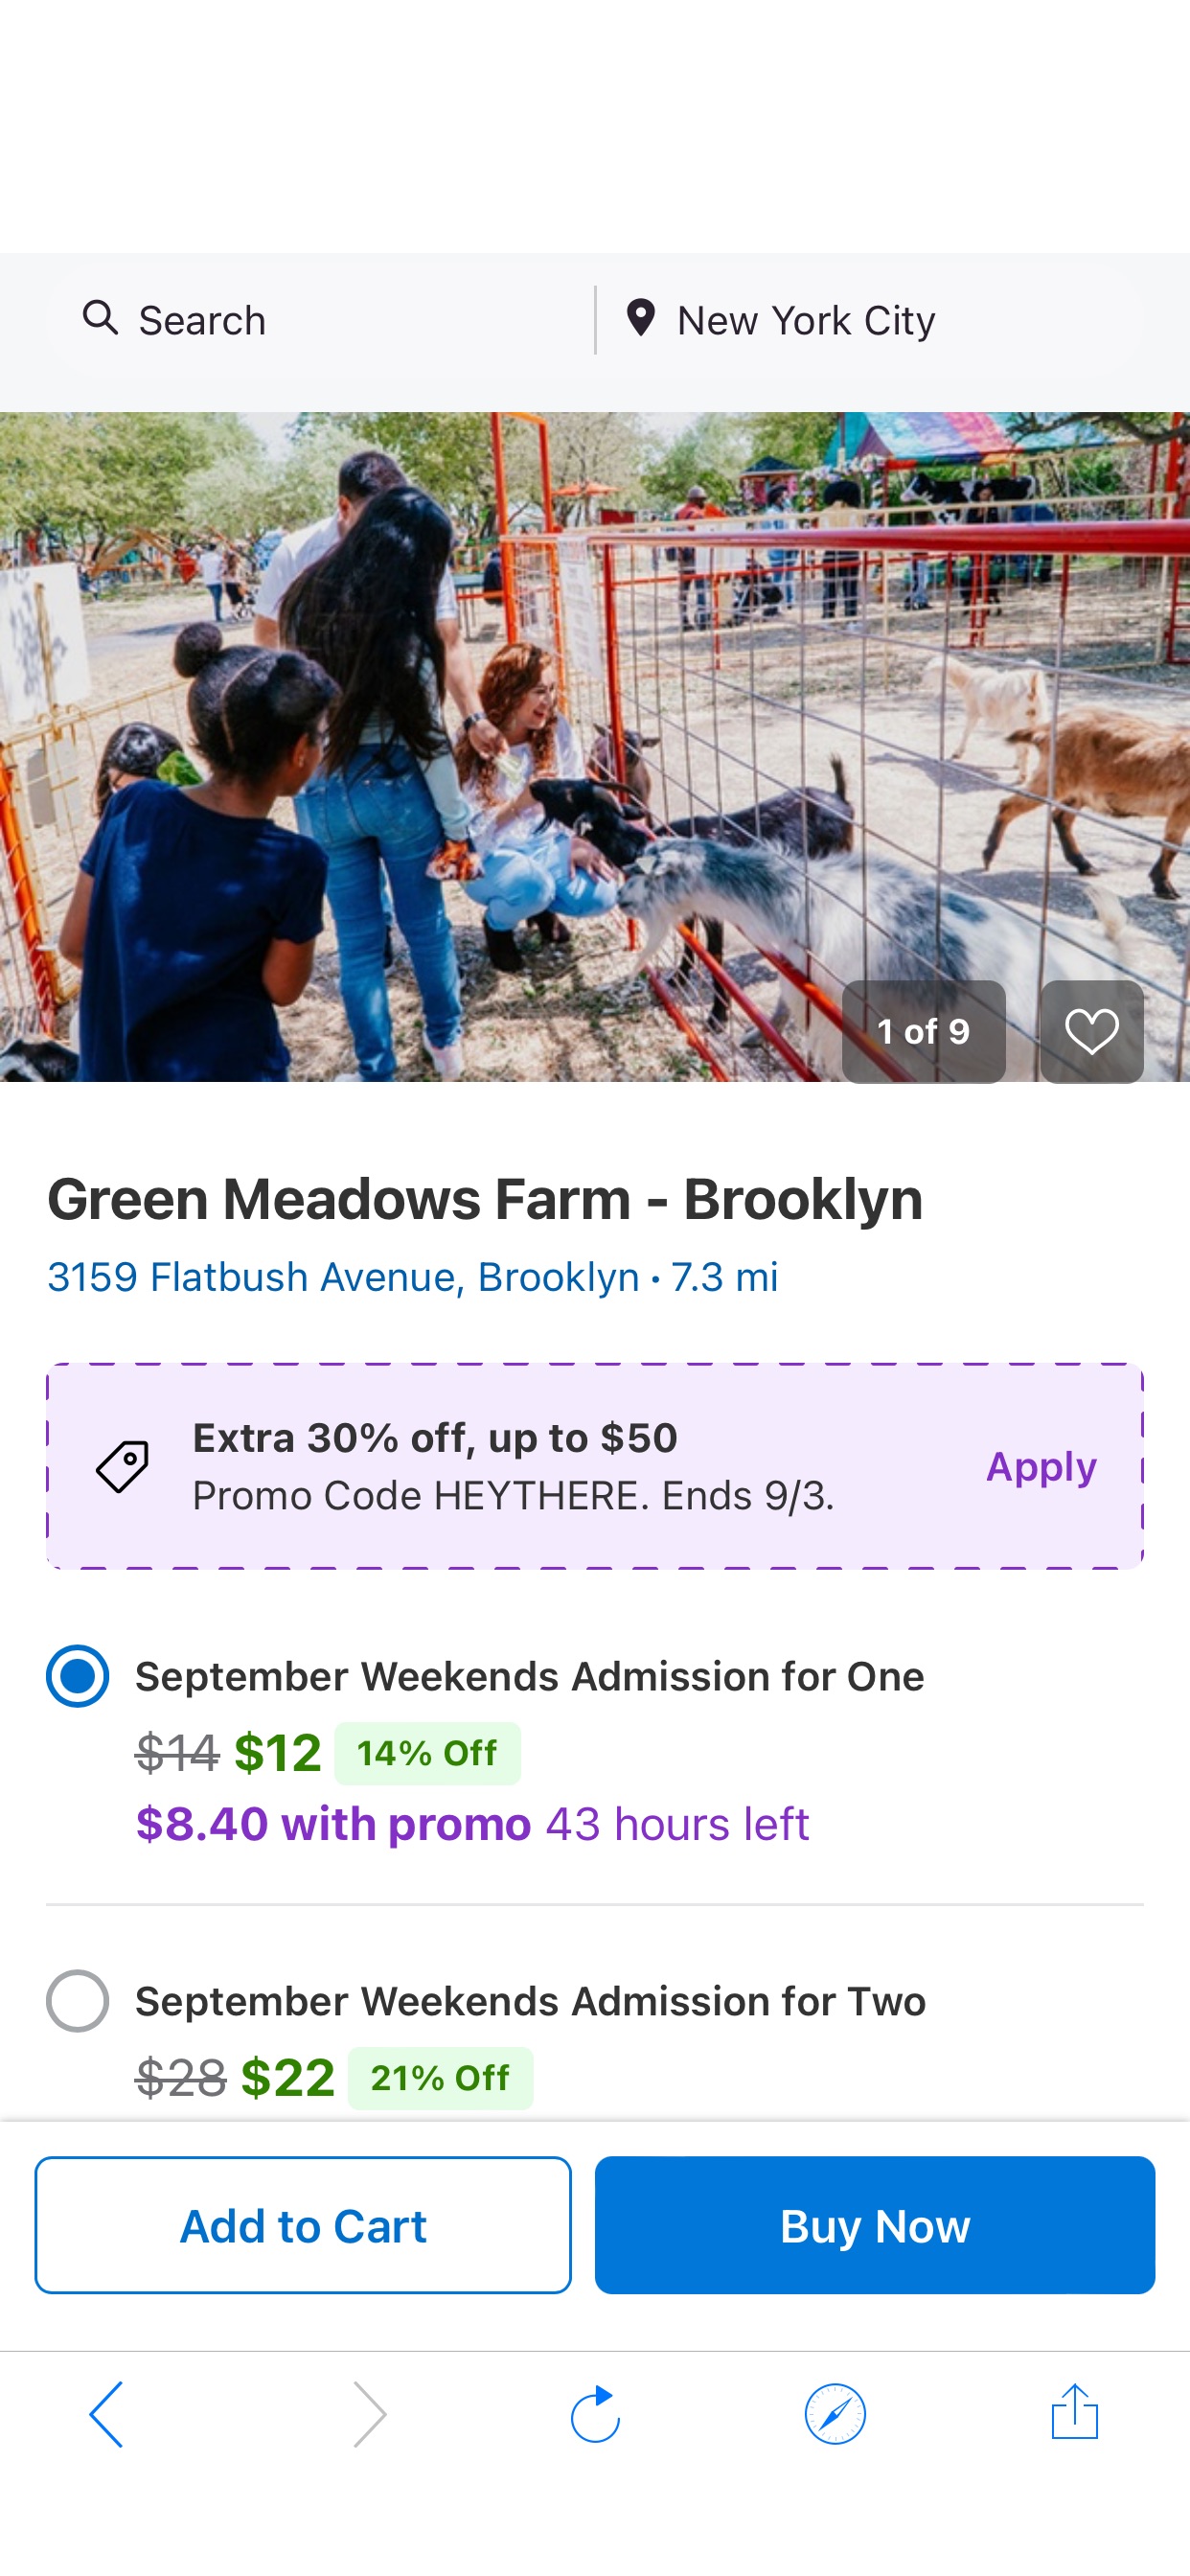 Green Meadows Farm - Brooklyn - Up To 25% Off - Brooklyn, NY | Groupon